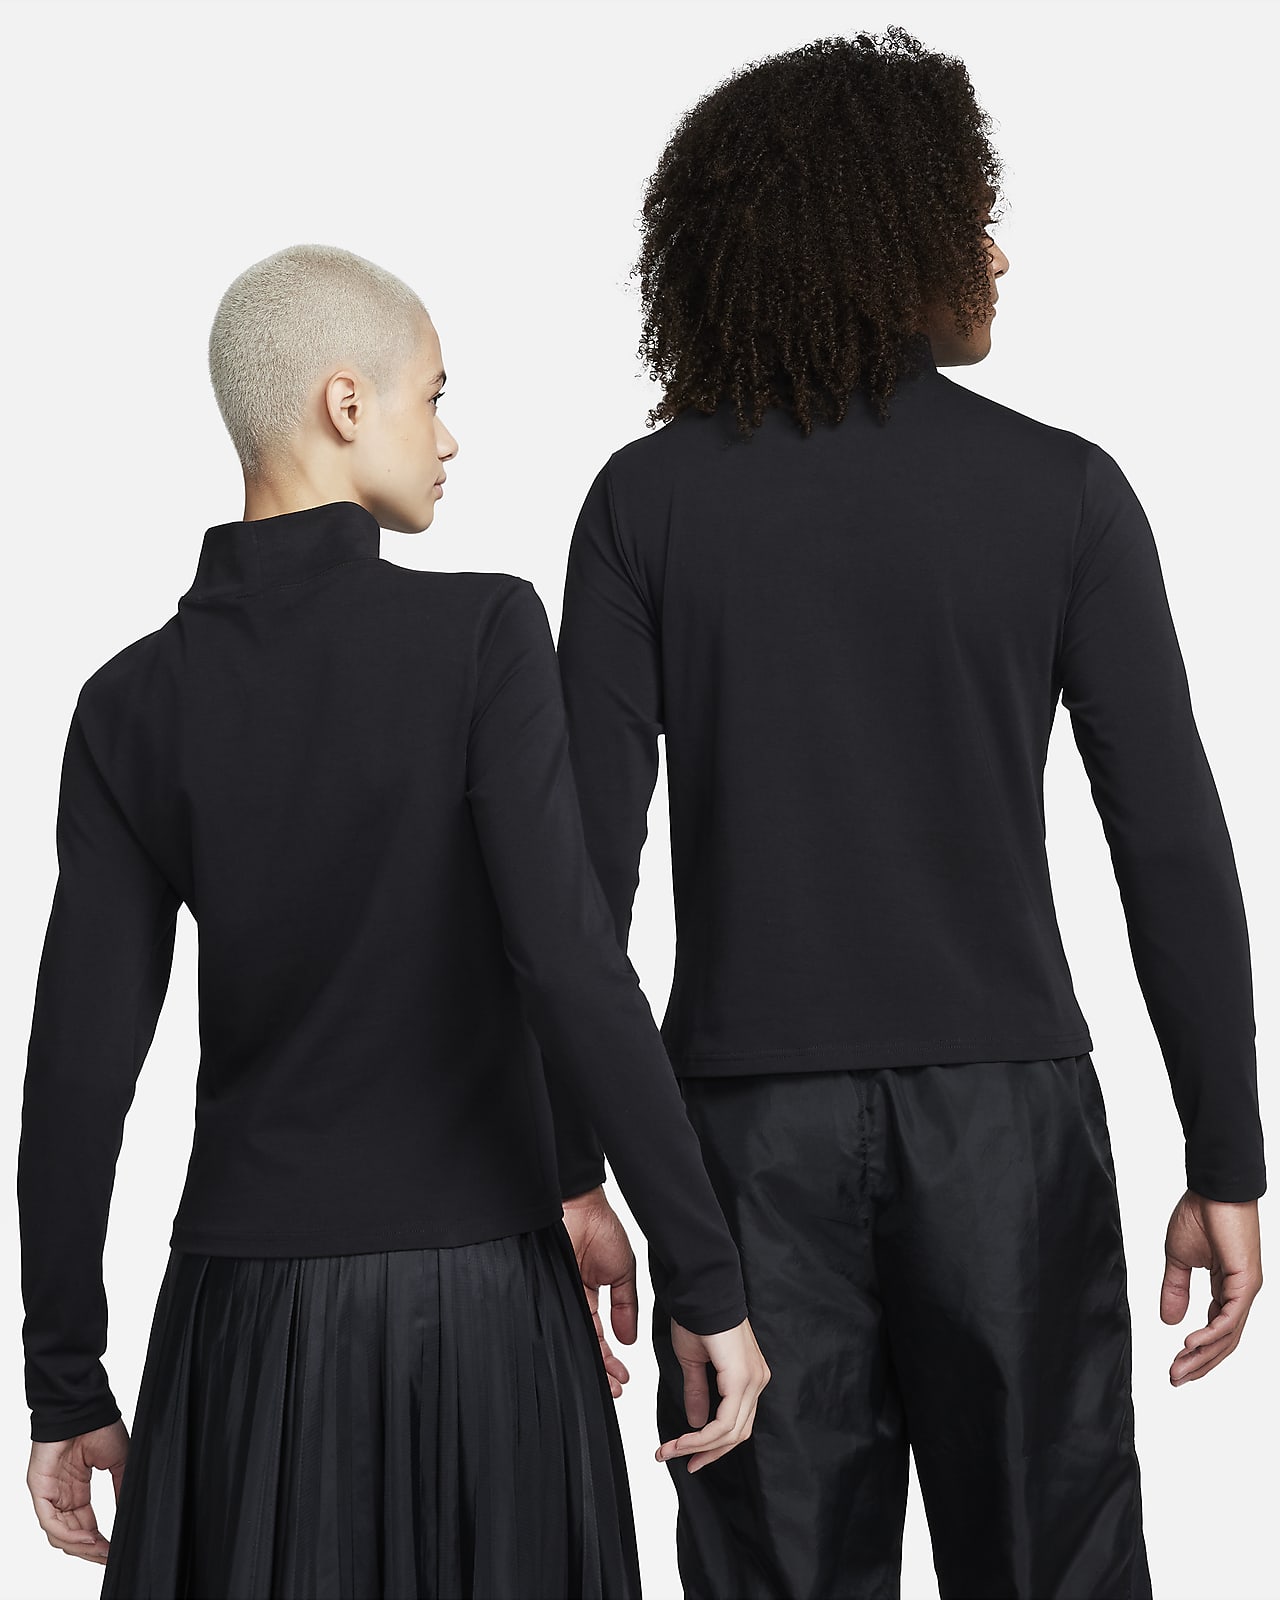 Nike Sportswear Women\'s Top. Collection Long-Sleeve Mock Essentials